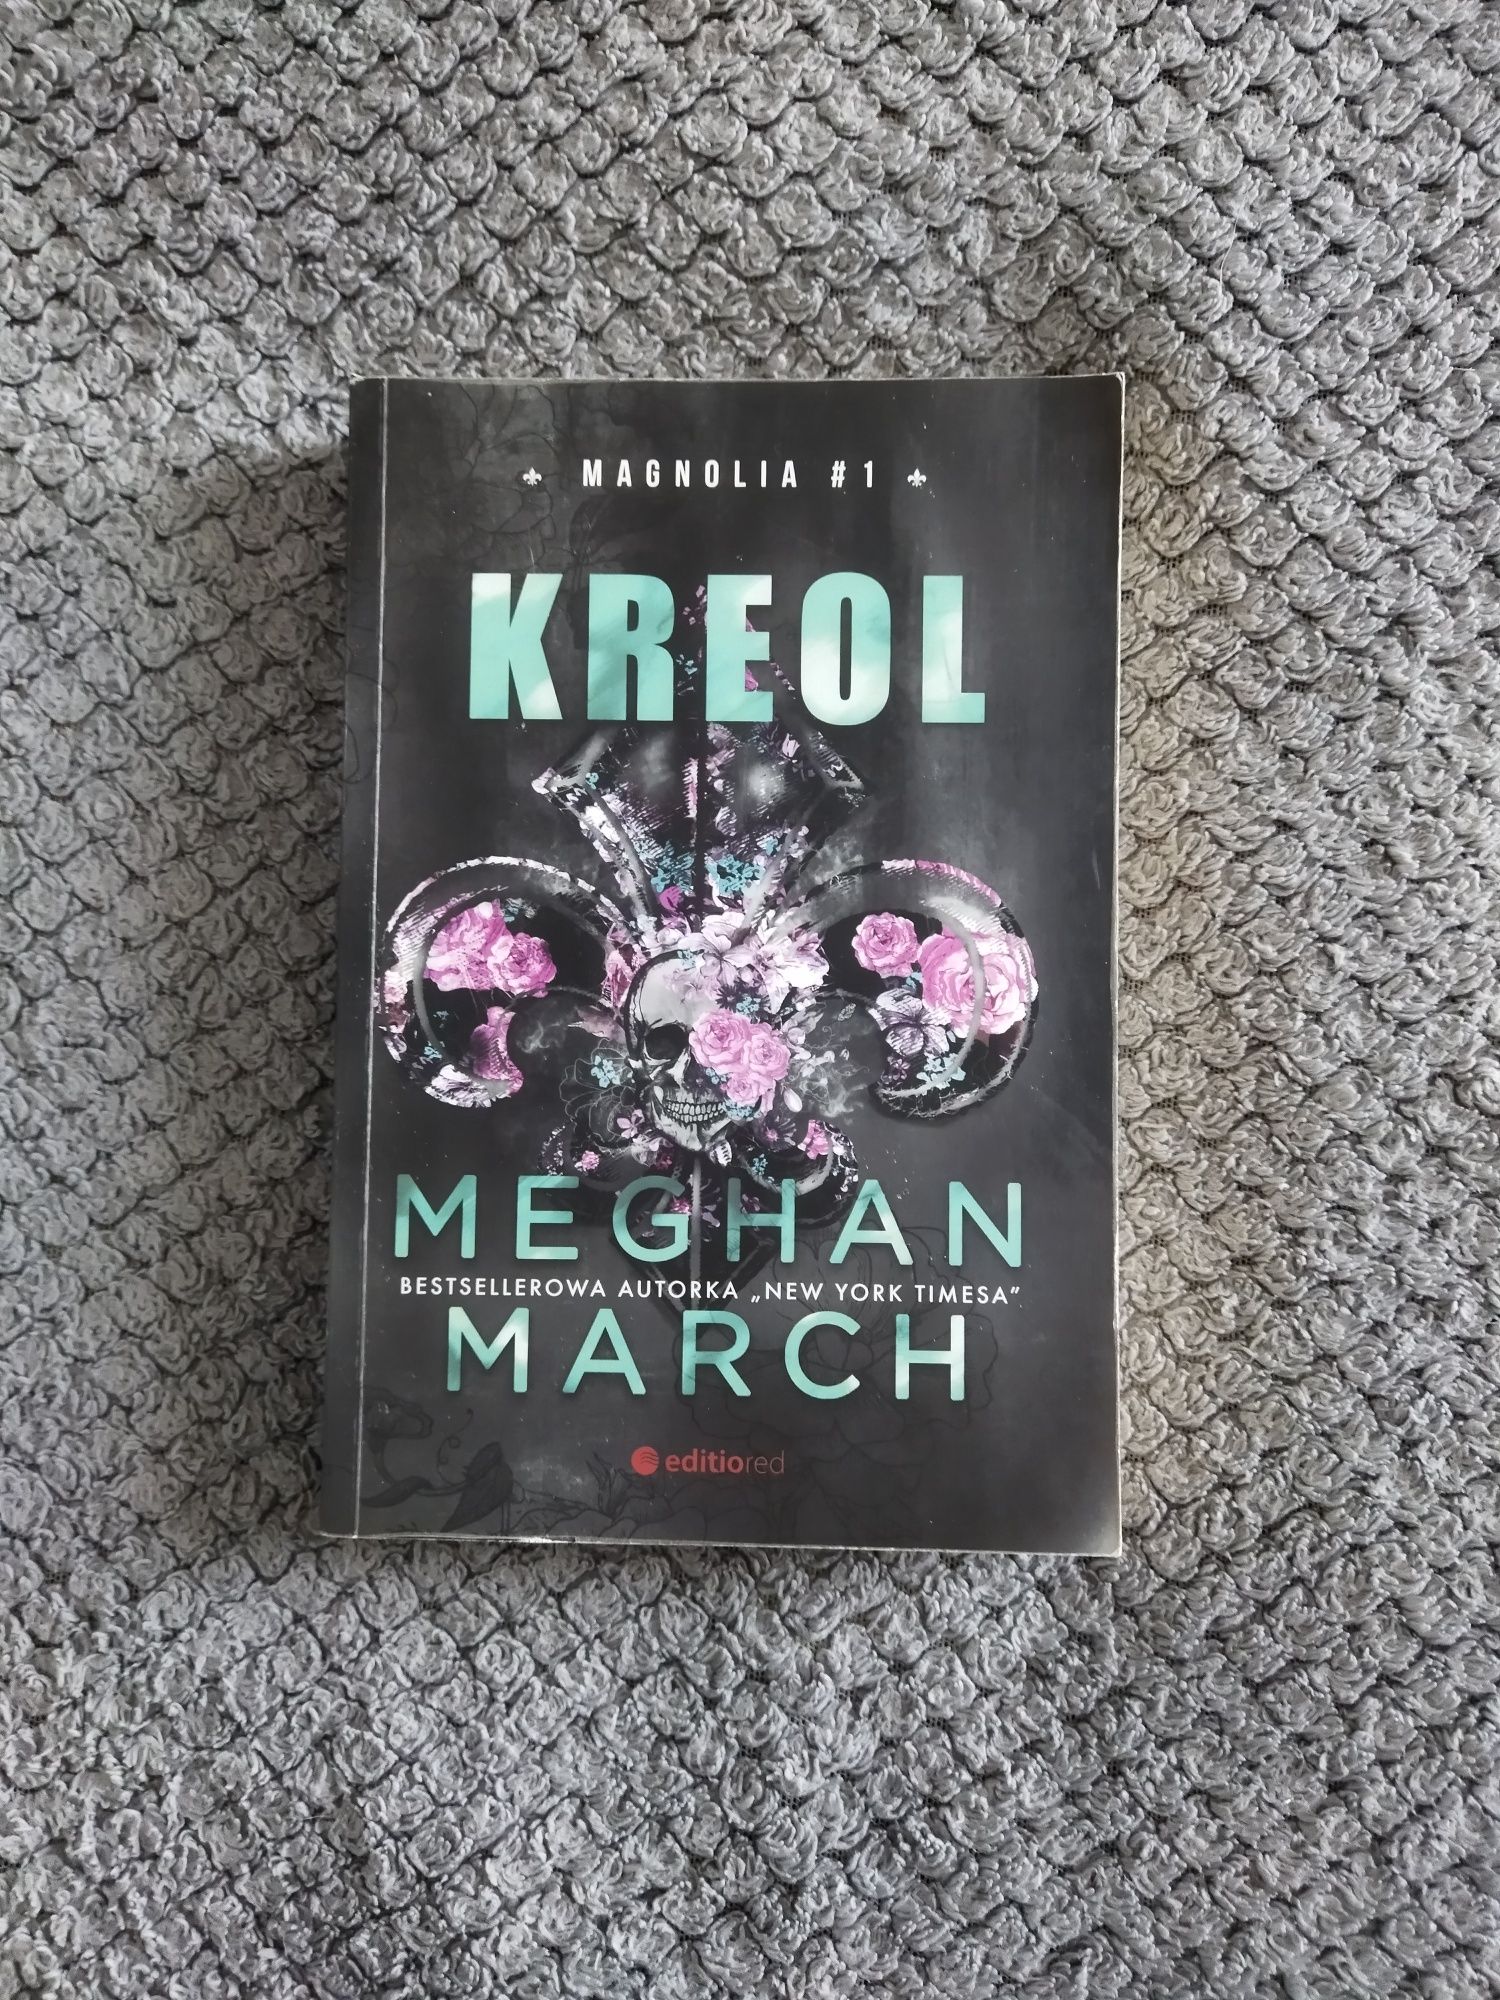 Książka "Kreol Magnolia #1". Meghan March